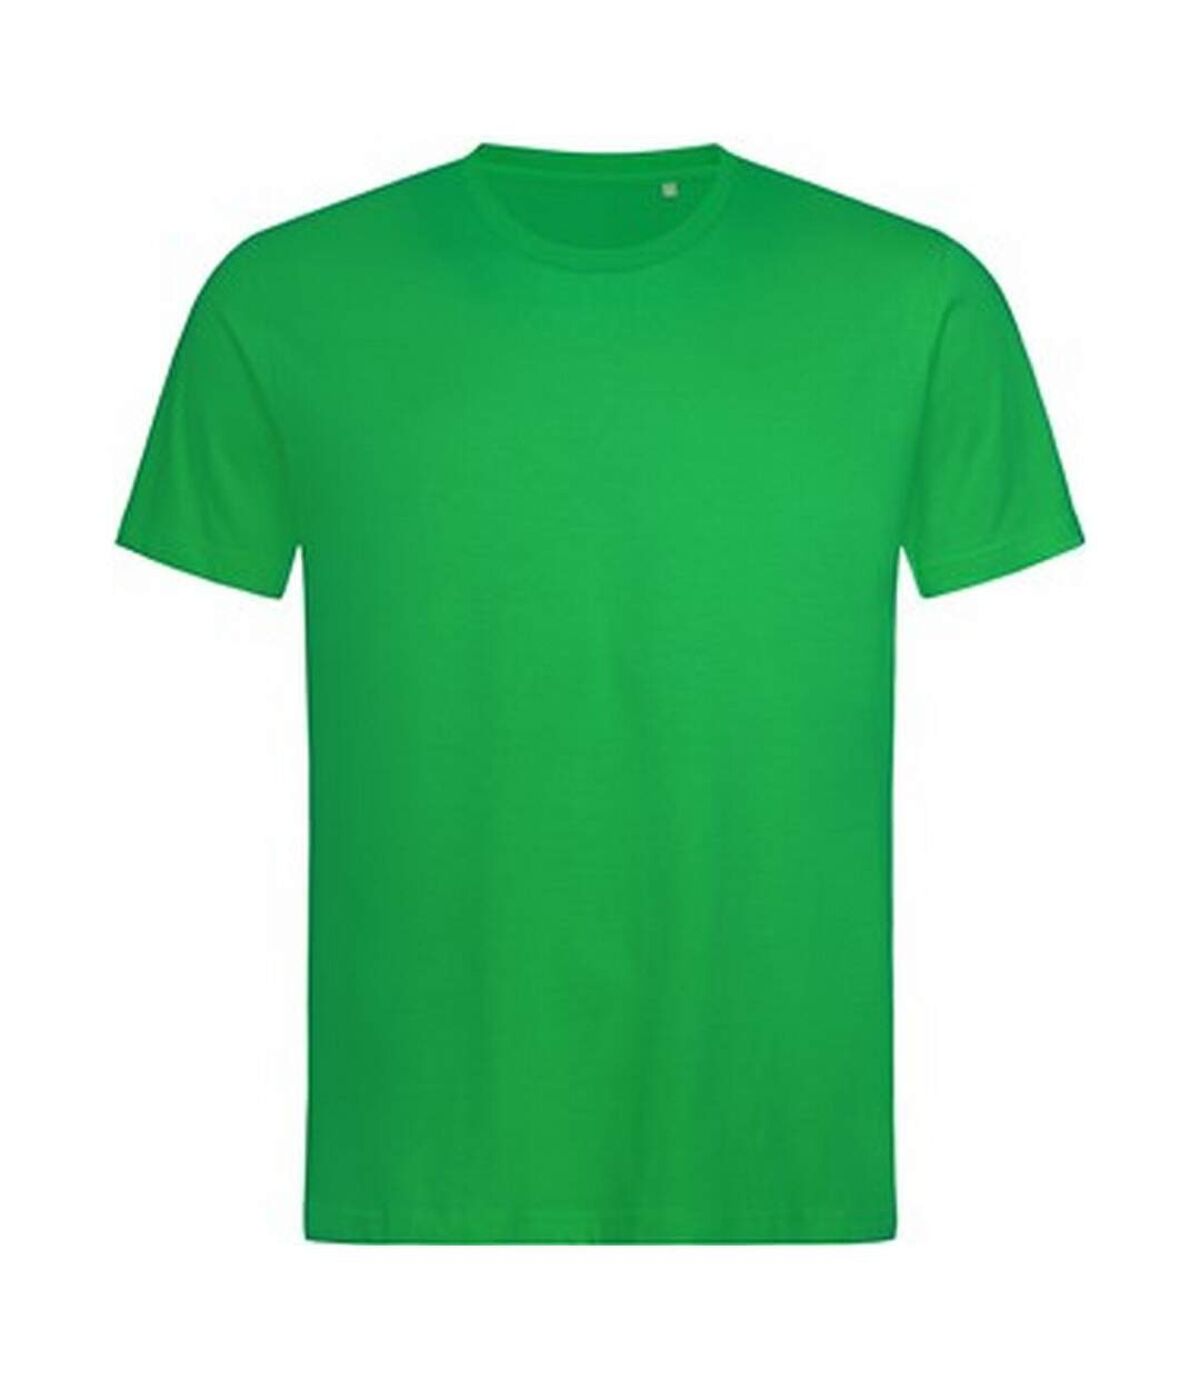 Stedman Mens Lux T-Shirt (Kelly Green)